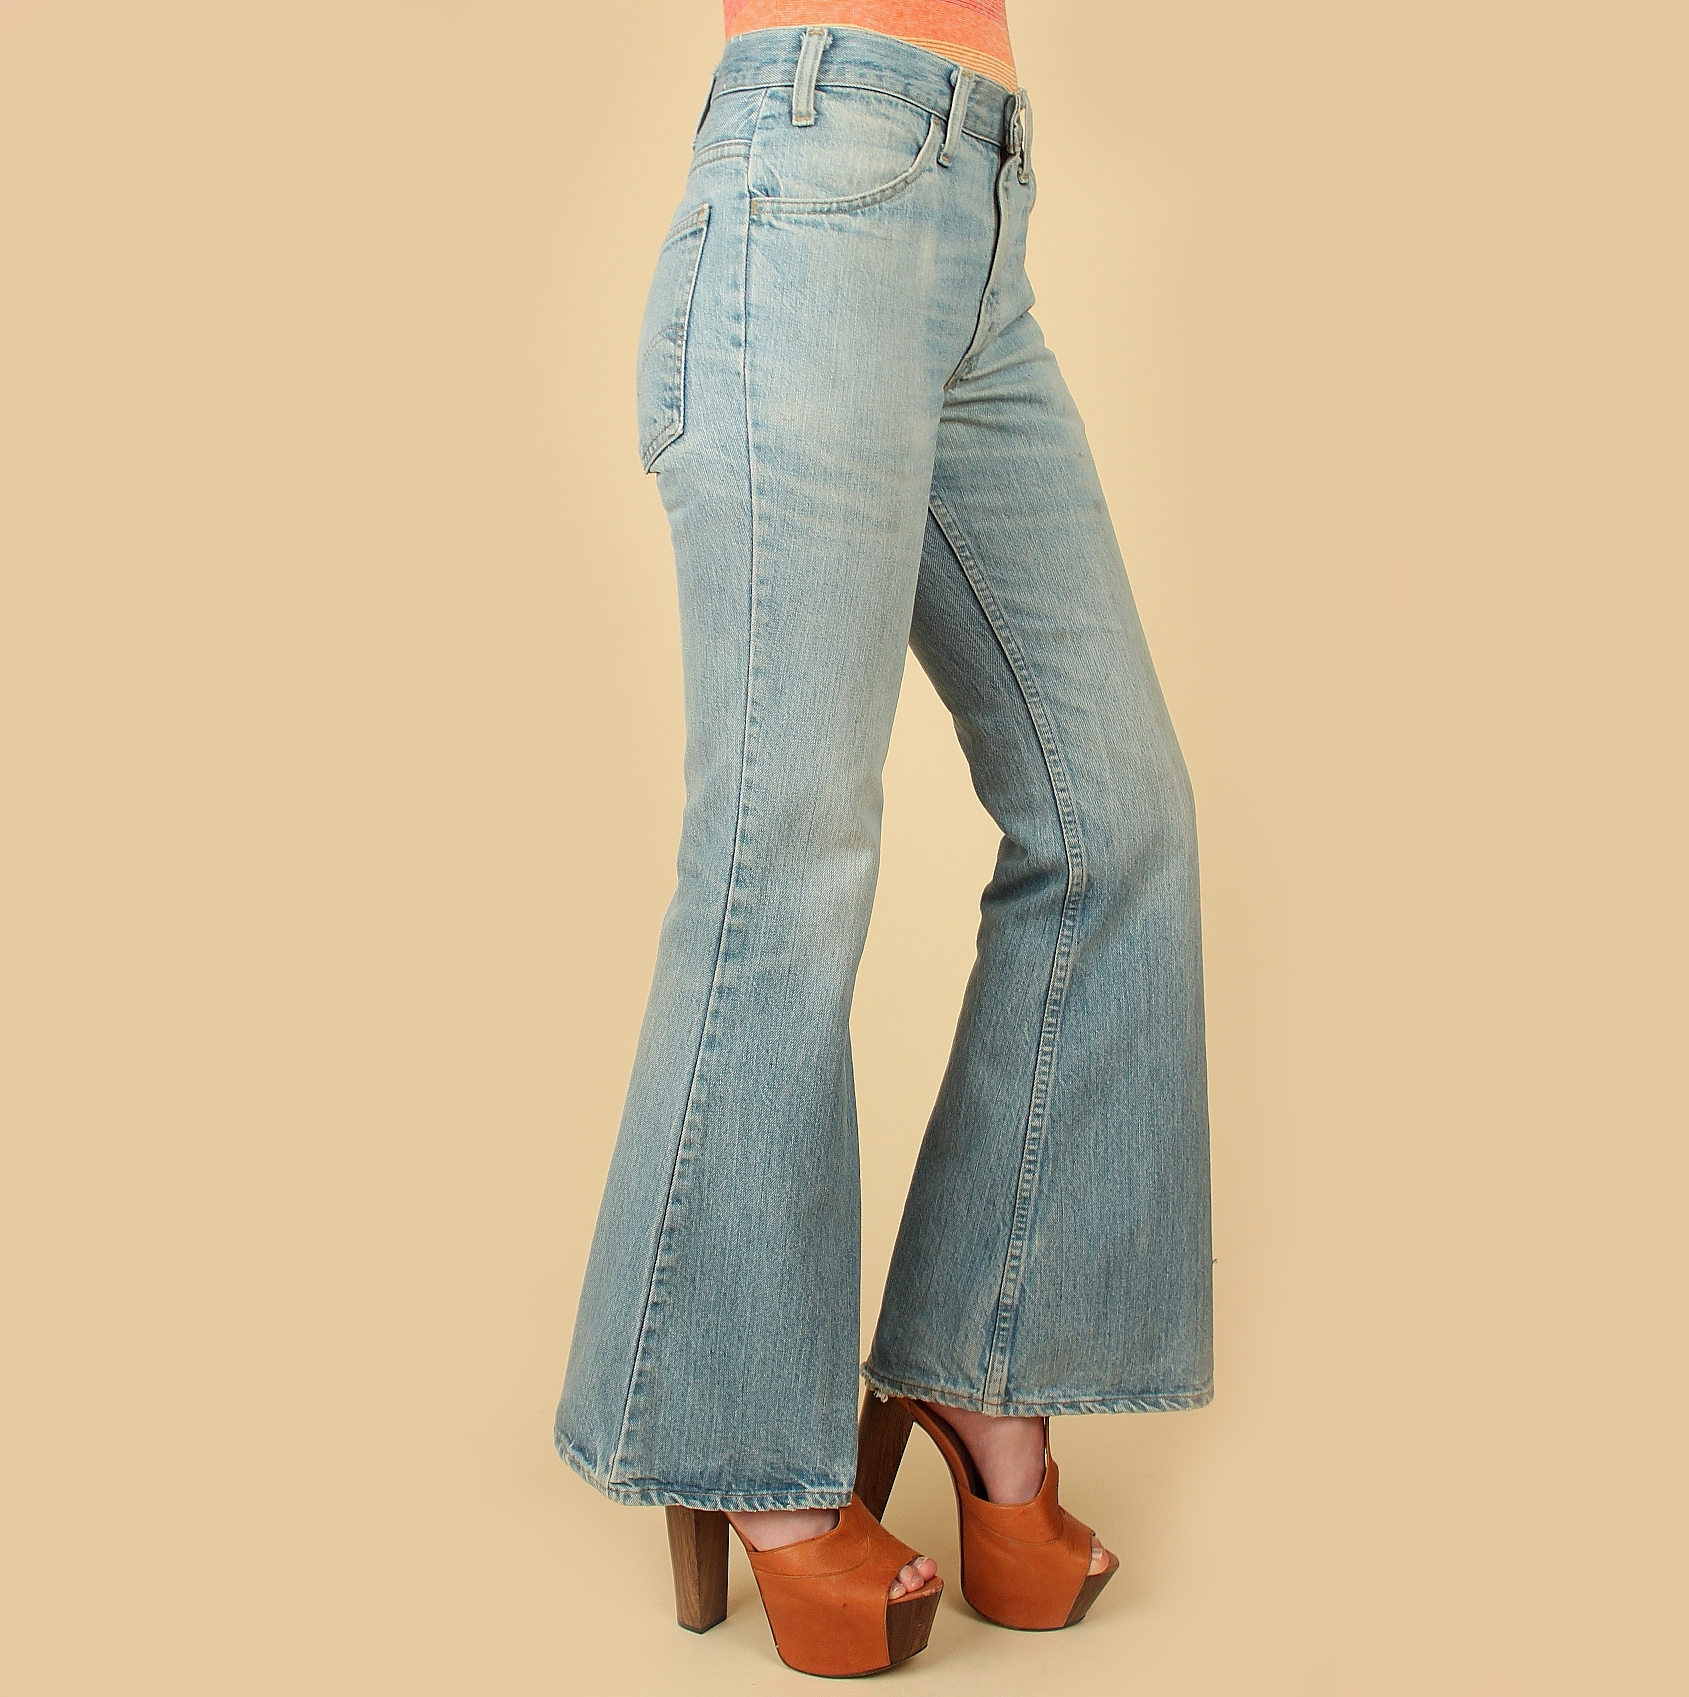 levis jeans bell bottoms